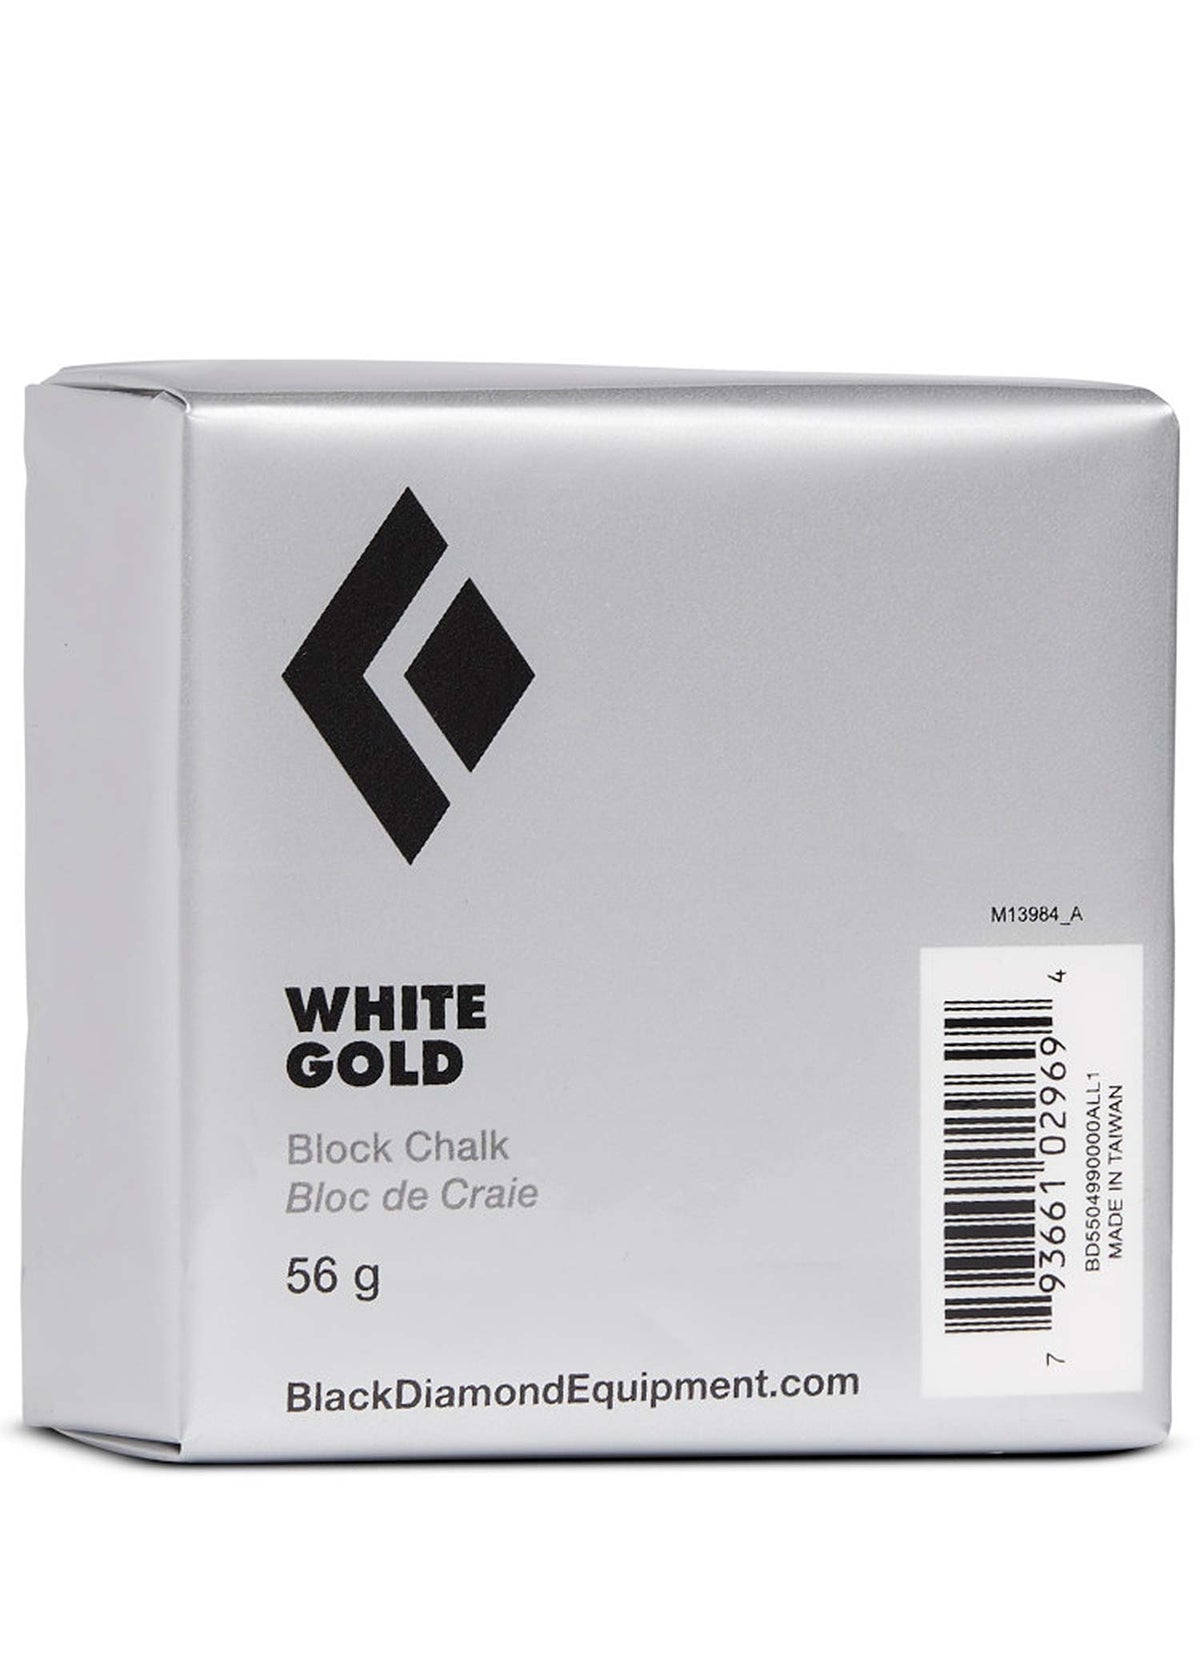 Black Diamond 56 g White Gold Block Chalk